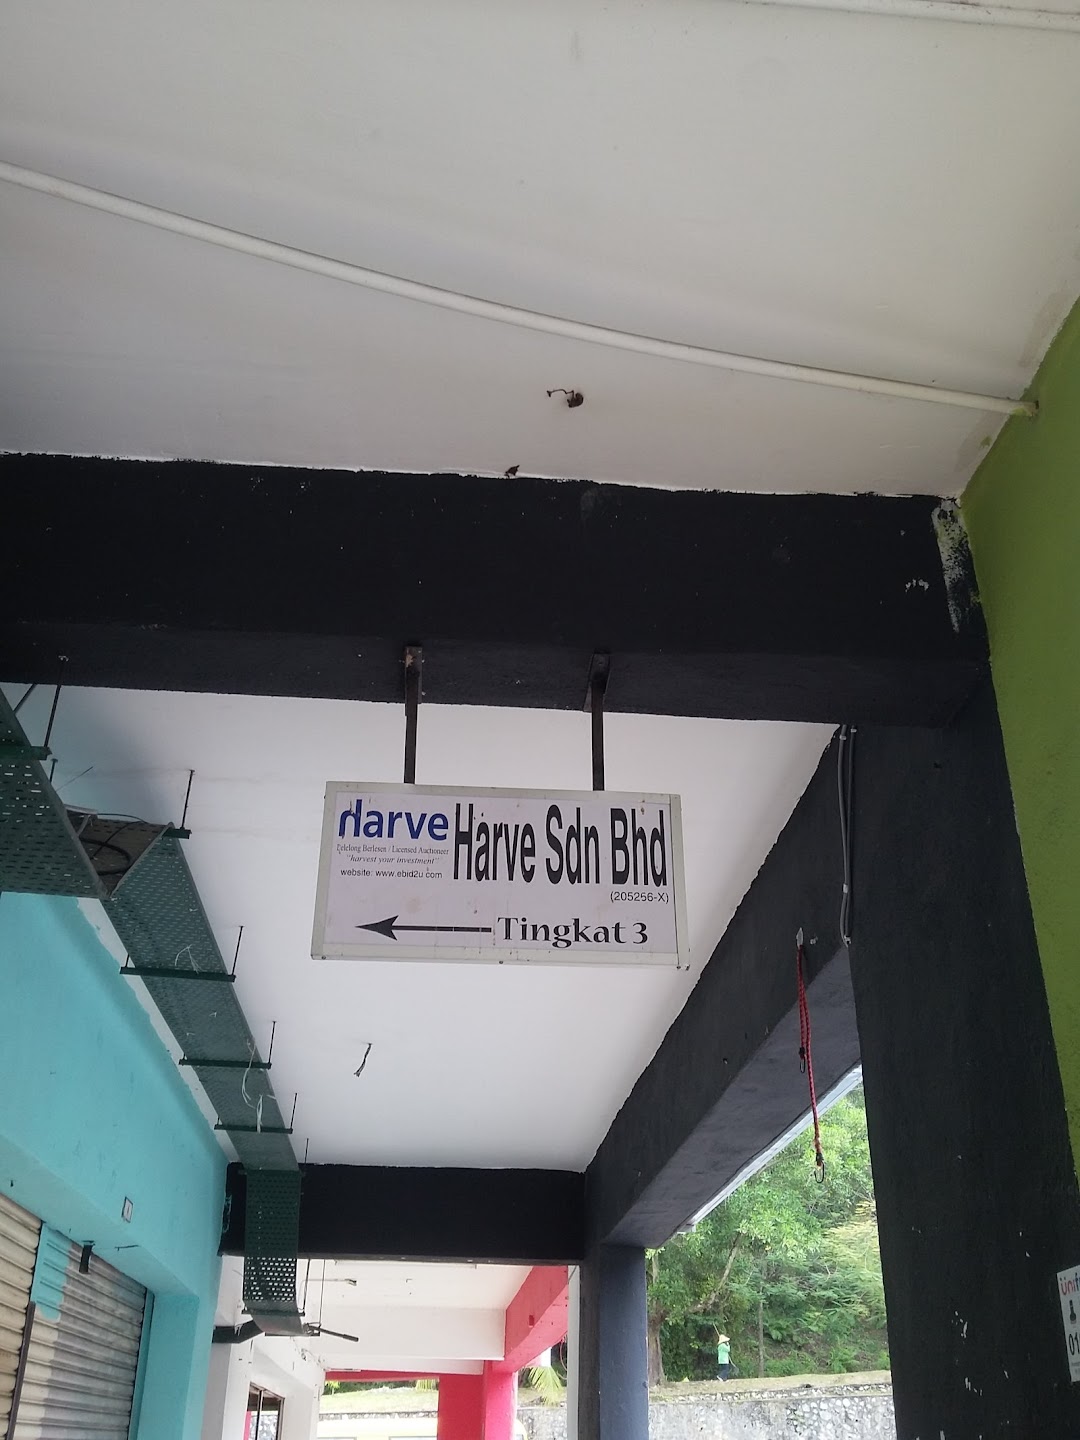 Harve Sdn Bhd